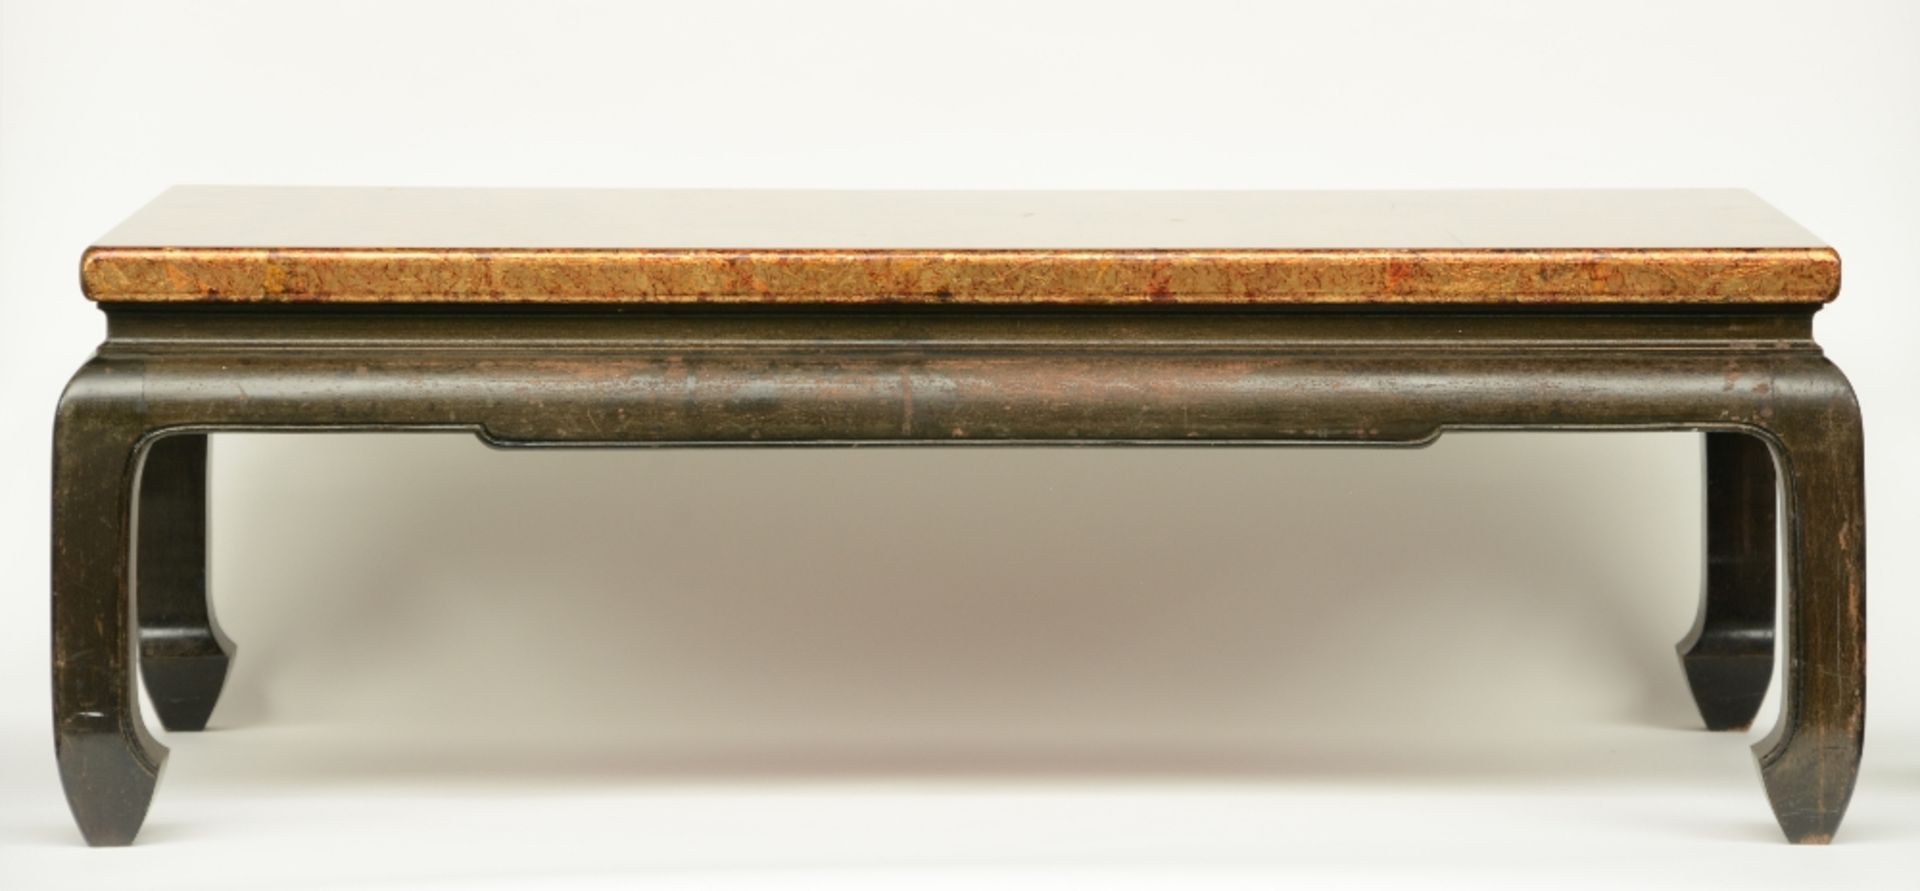 An Oriental decorative coffee table, H 37 - W 111,5 - D 55 cm